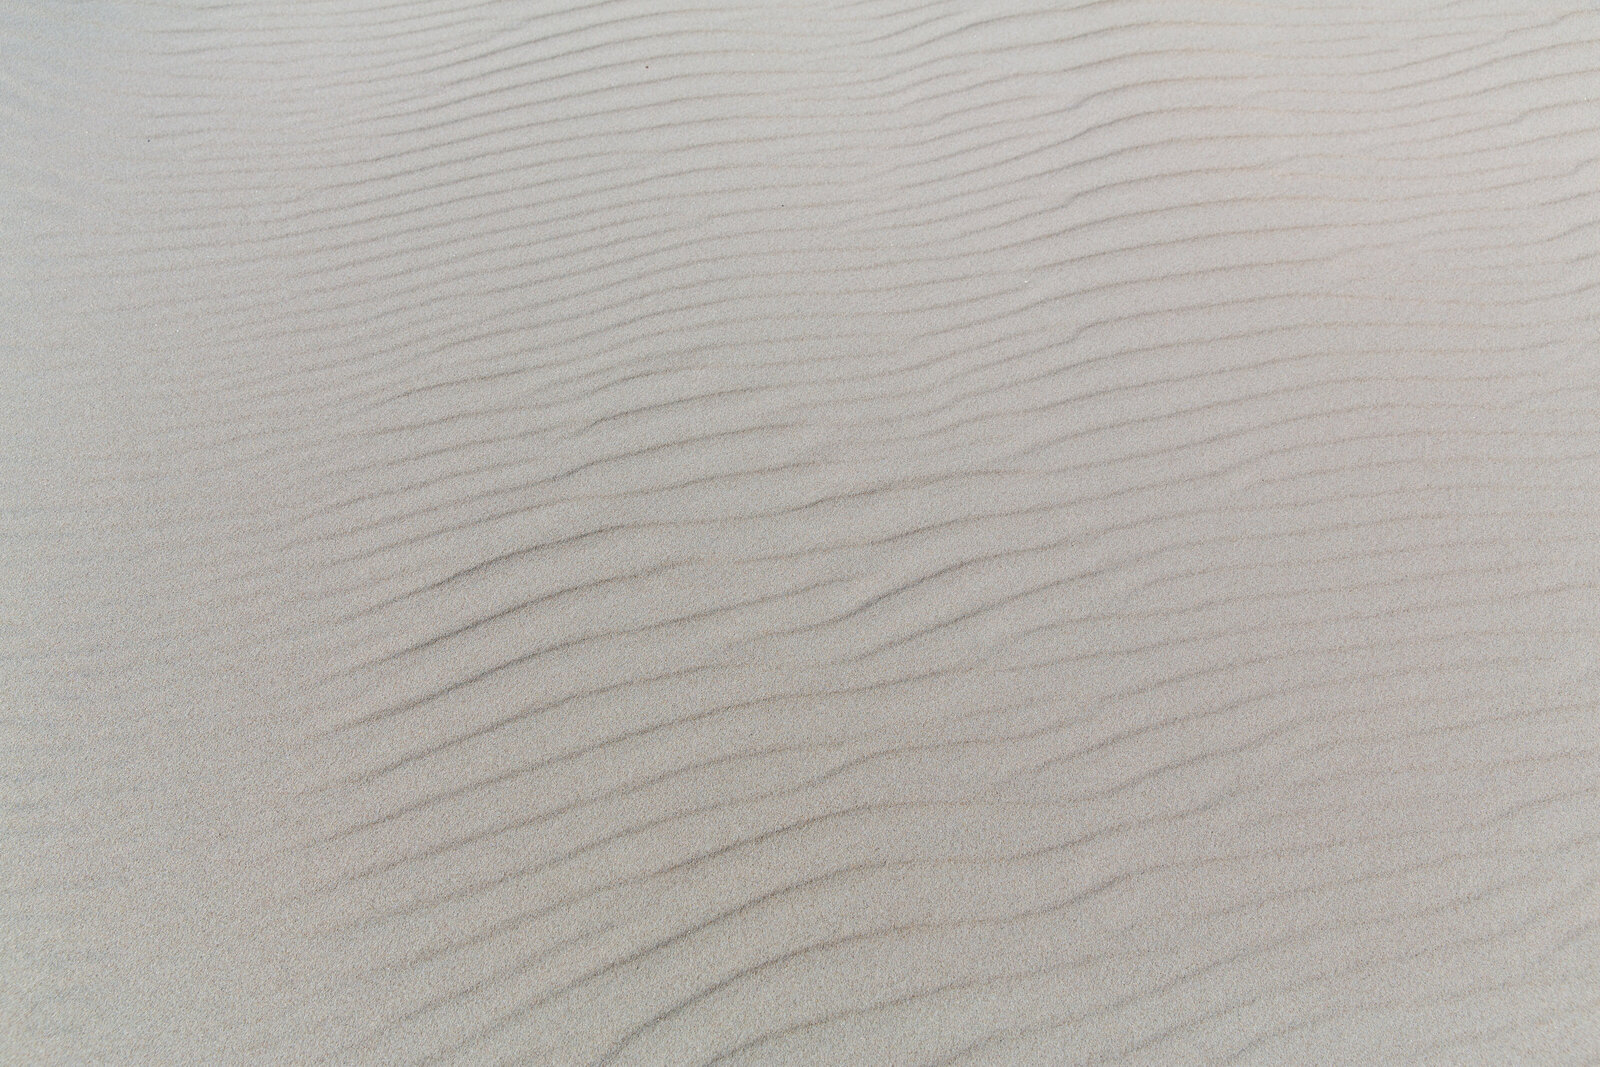 photos_2019_2_13_fst_wrinkled-sand-texture_IWlJz6I